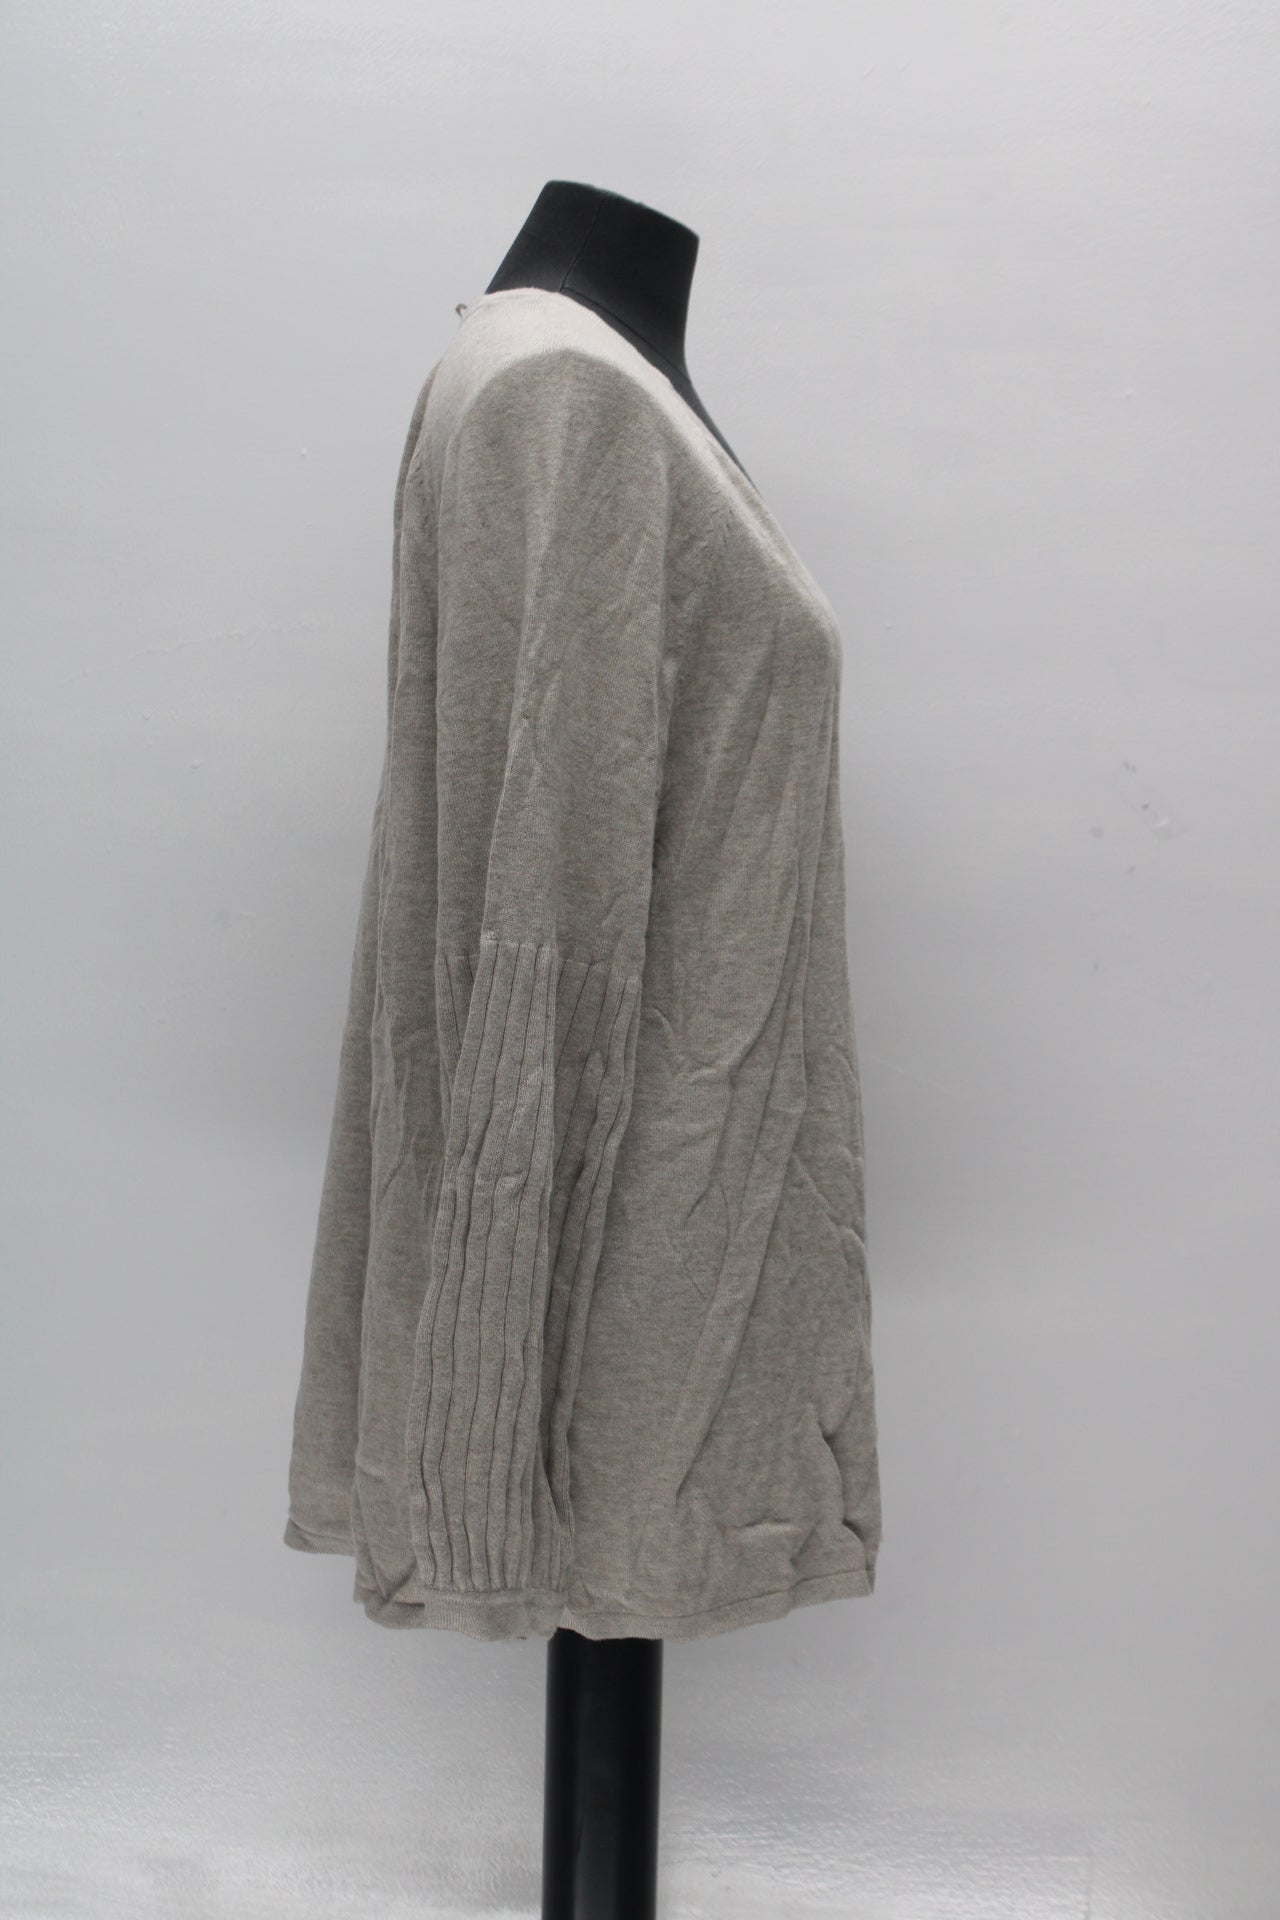 Style & Co Sweater Bishop Sleeve Tunic Beige XL